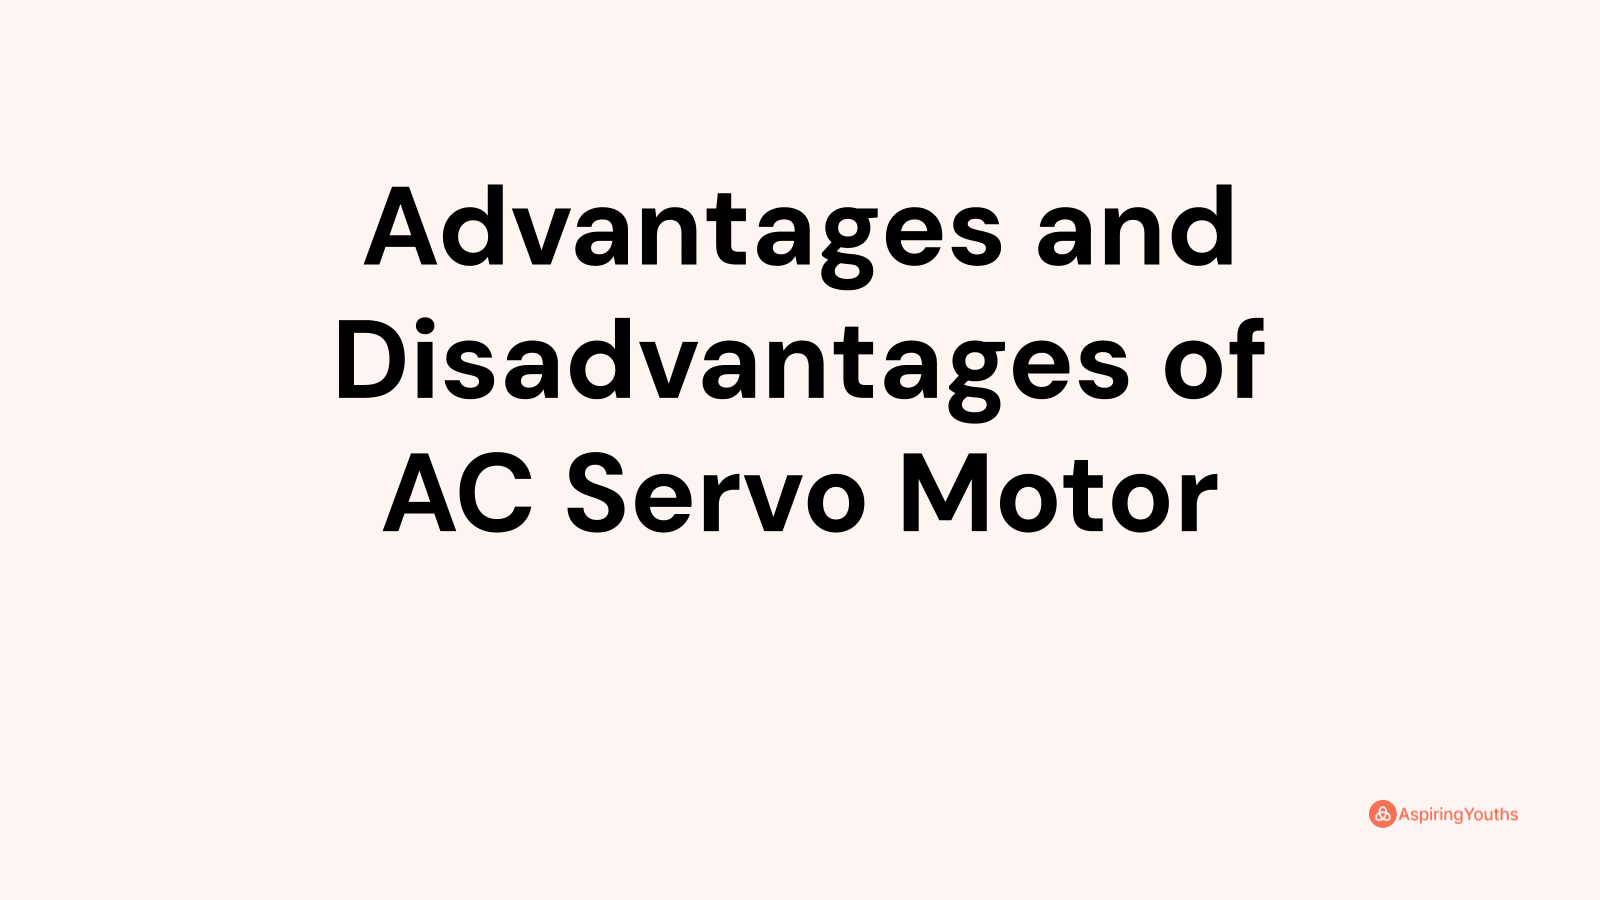 Advantages and disadvantages of AC Servo Motor